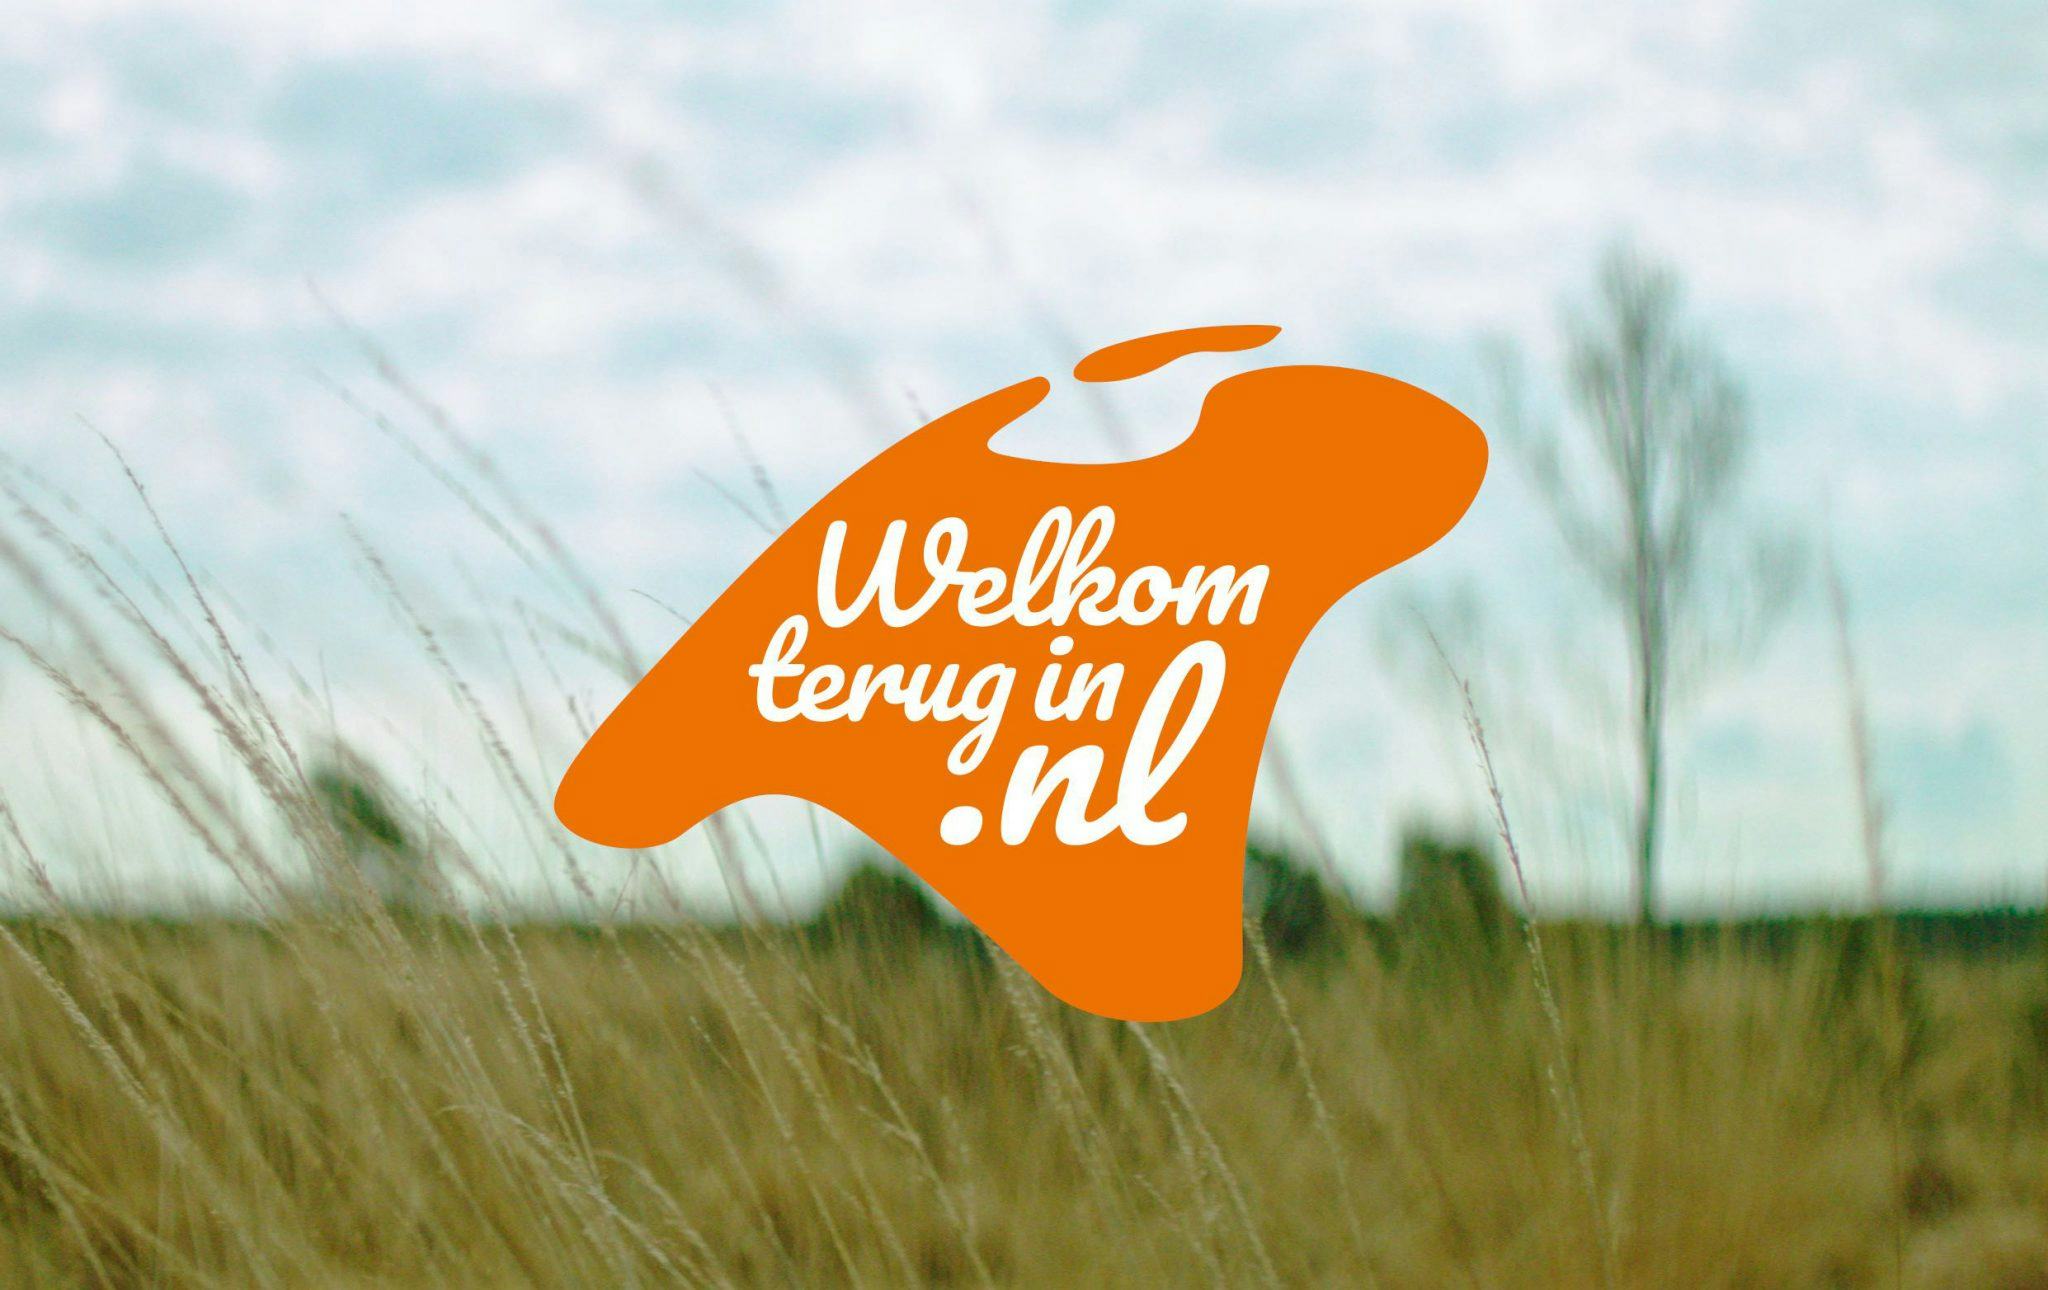 Campagne 'Welkom terug in Nederland' om staycation te stimuleren